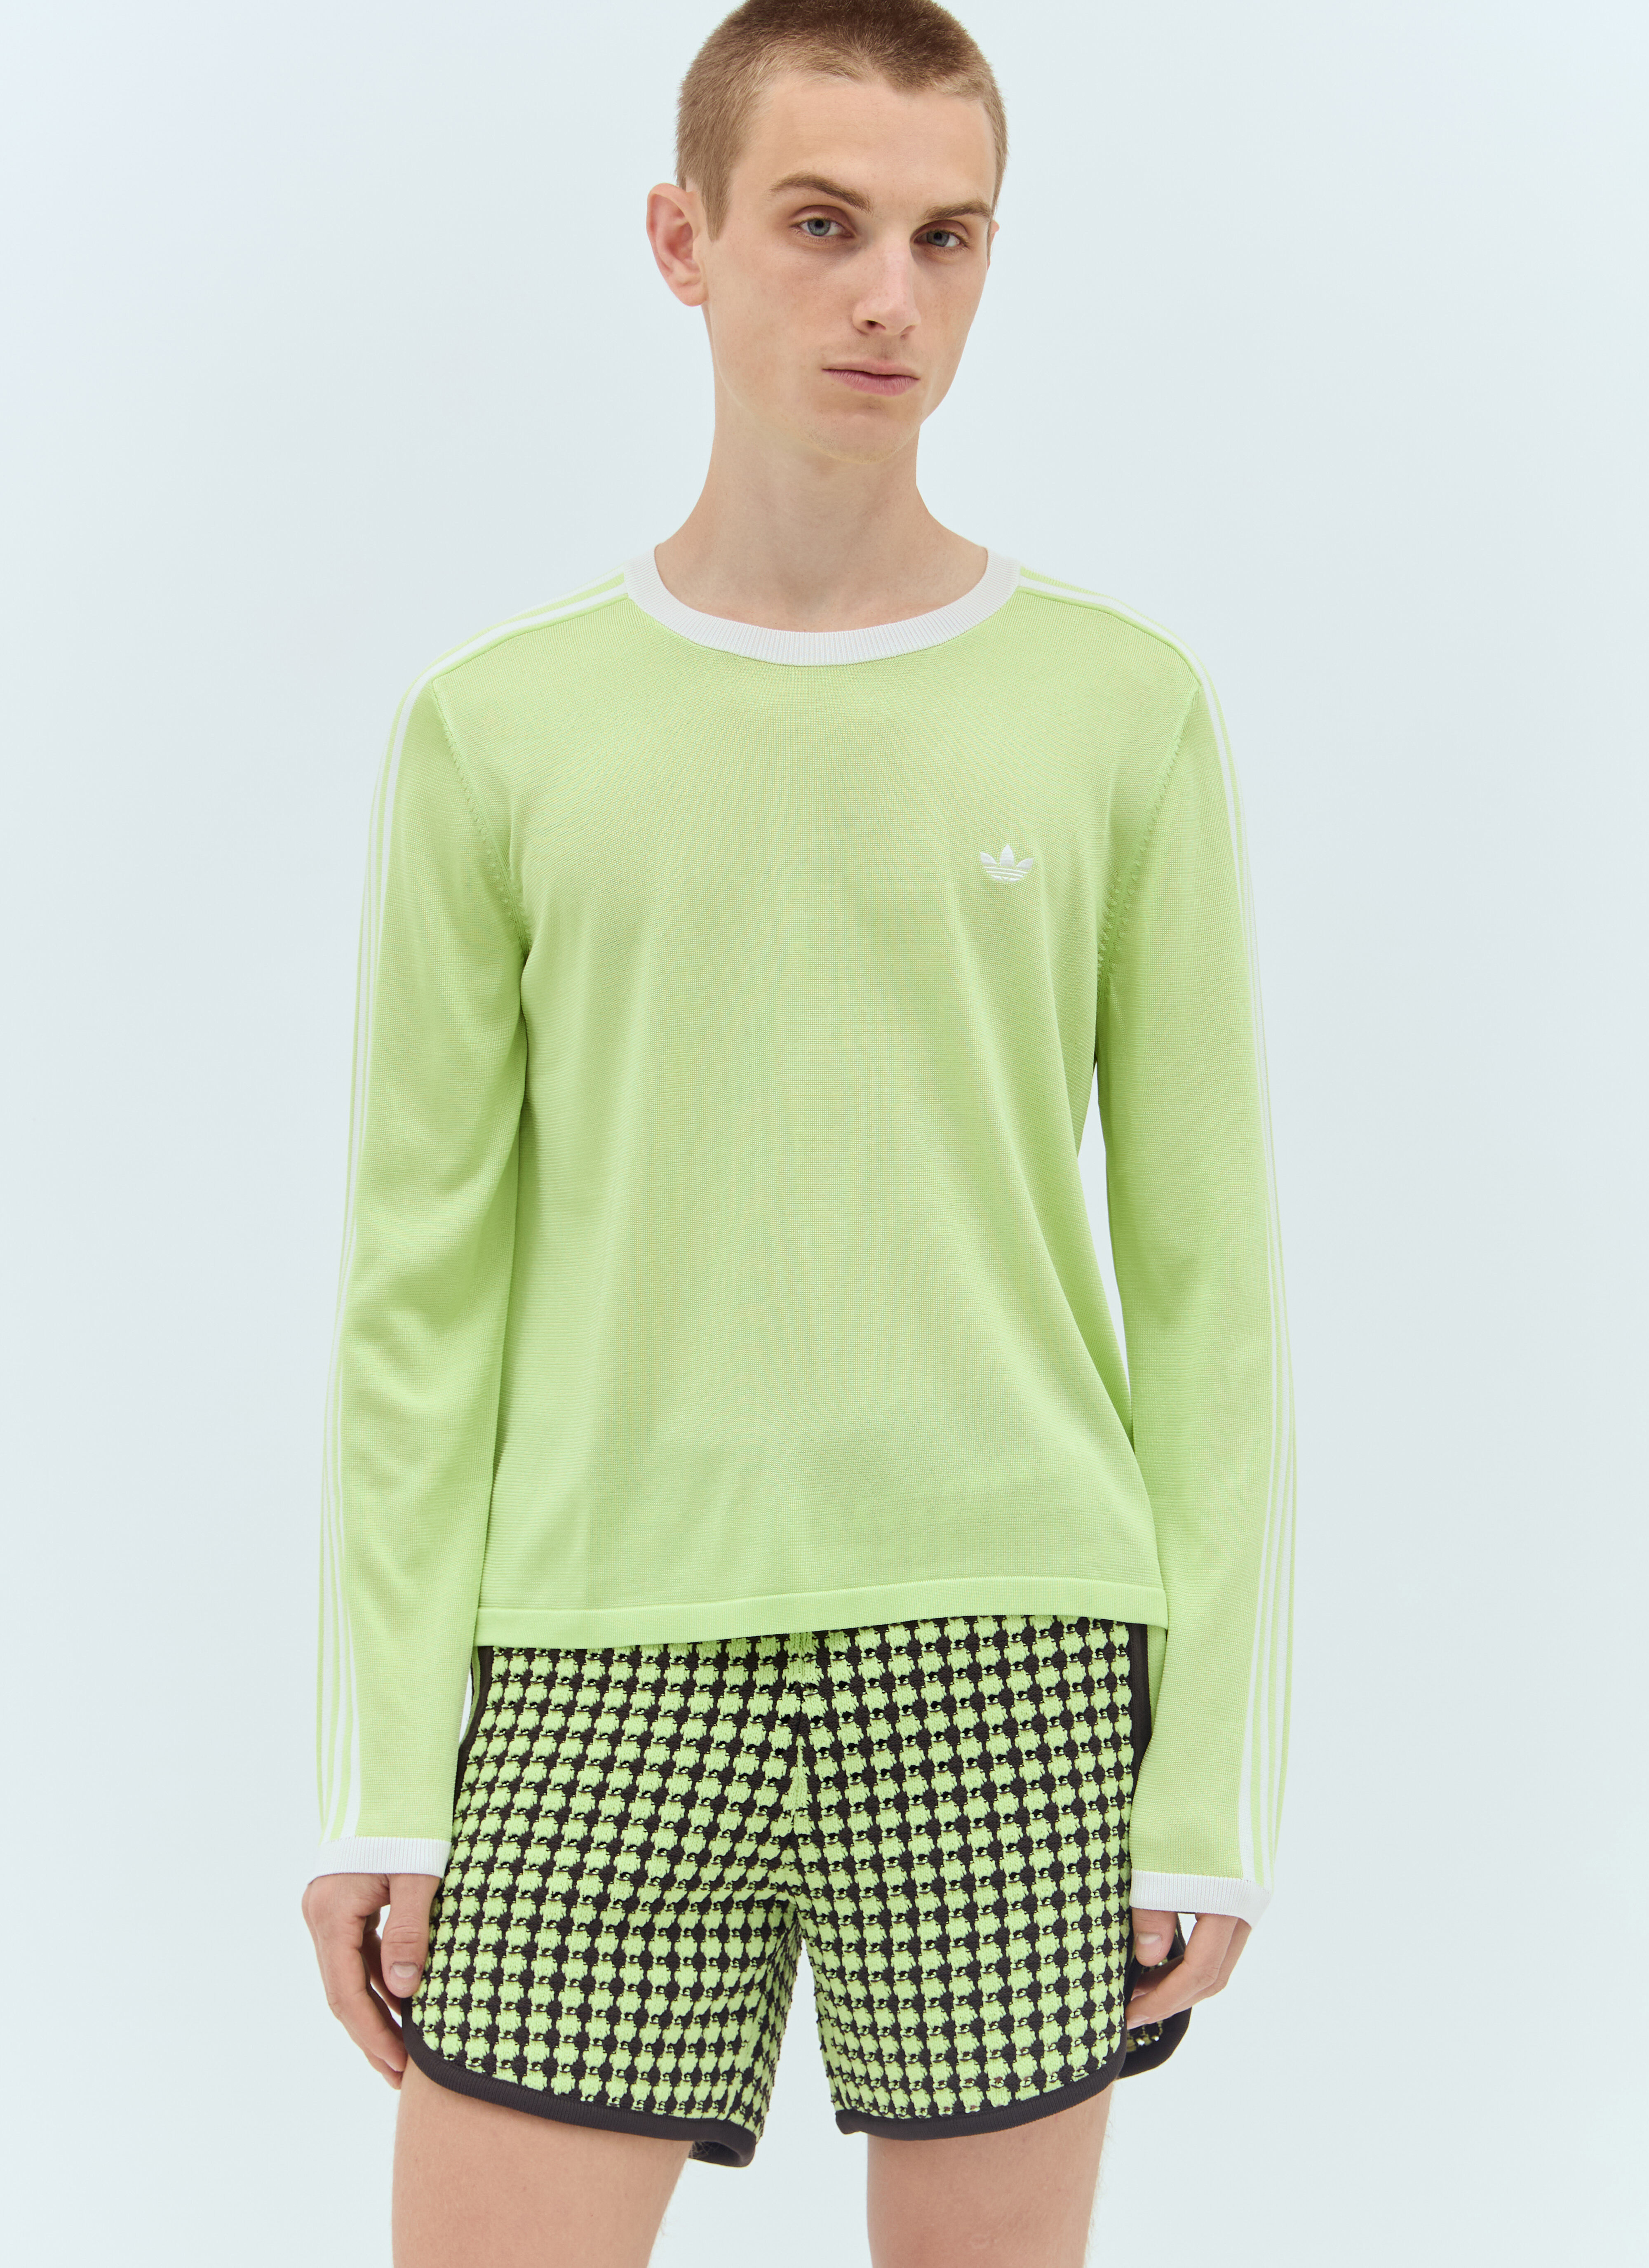 adidas by Craig Green Long Sleeve Knit T-Shirt Cream adg0153003